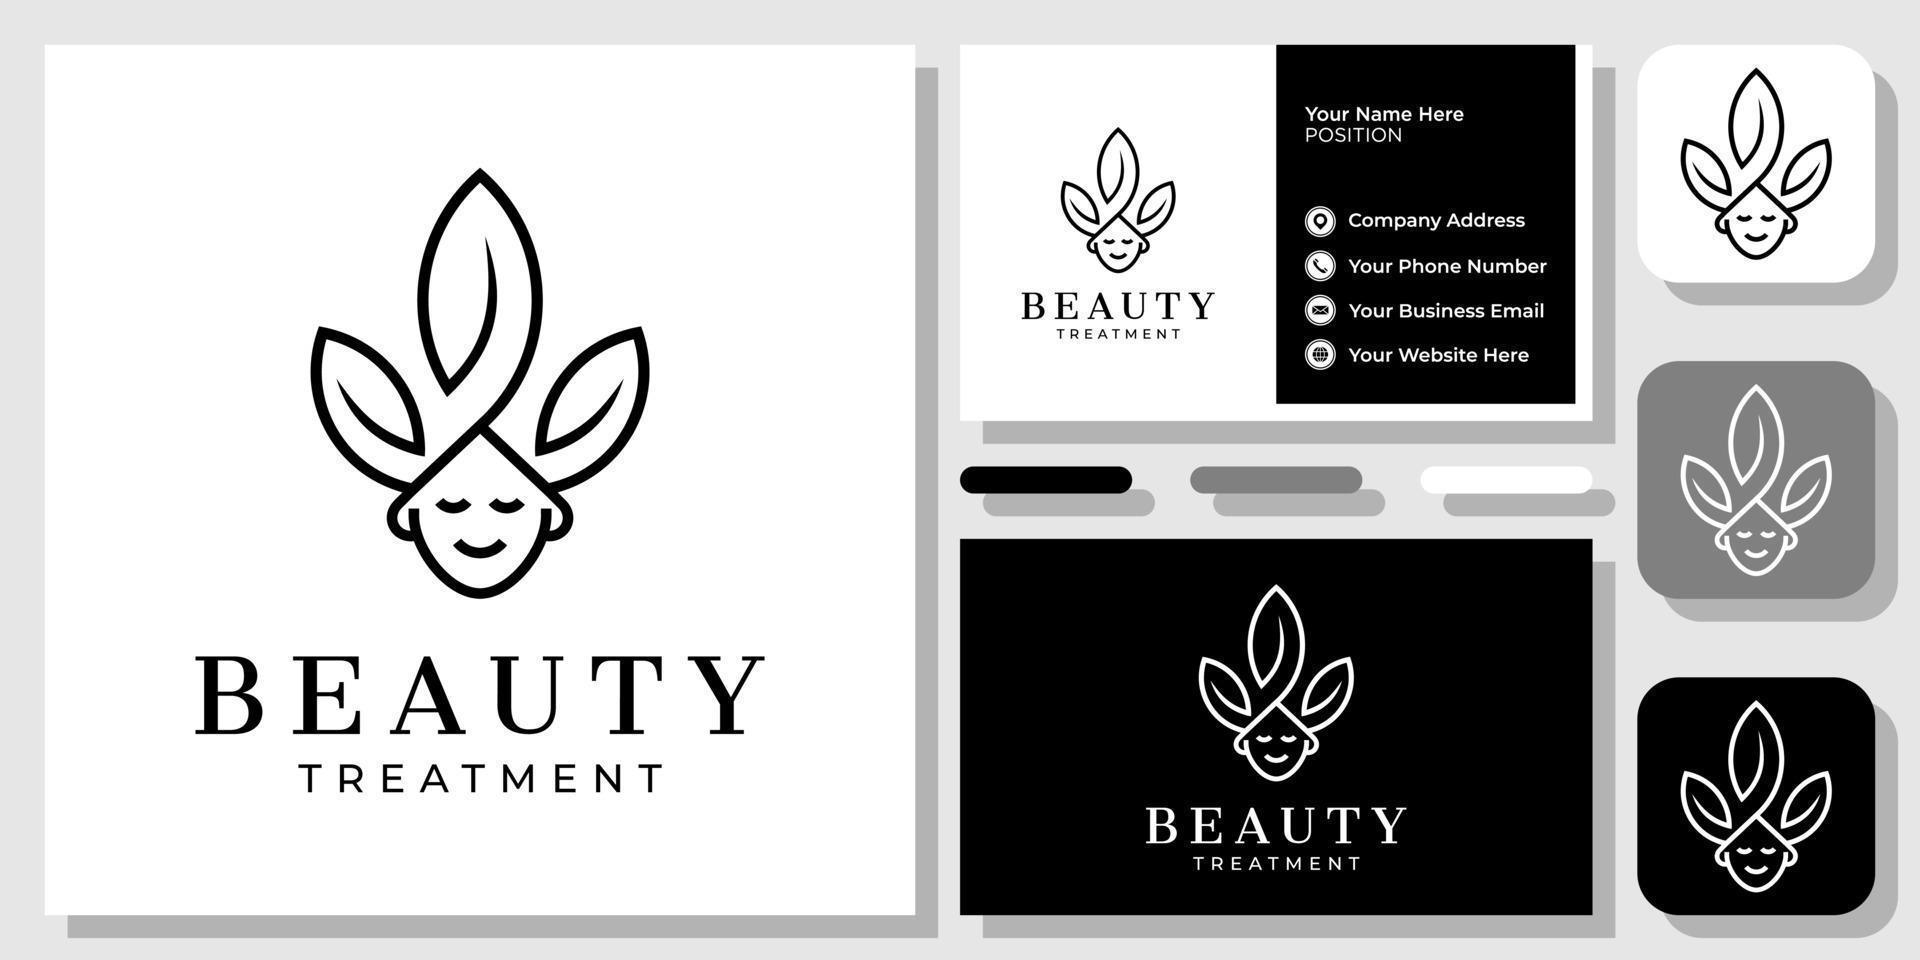 Woman Head Face Leaf Hair Beauty Salon Treatment Nature Logo Design with Business Card Template vector